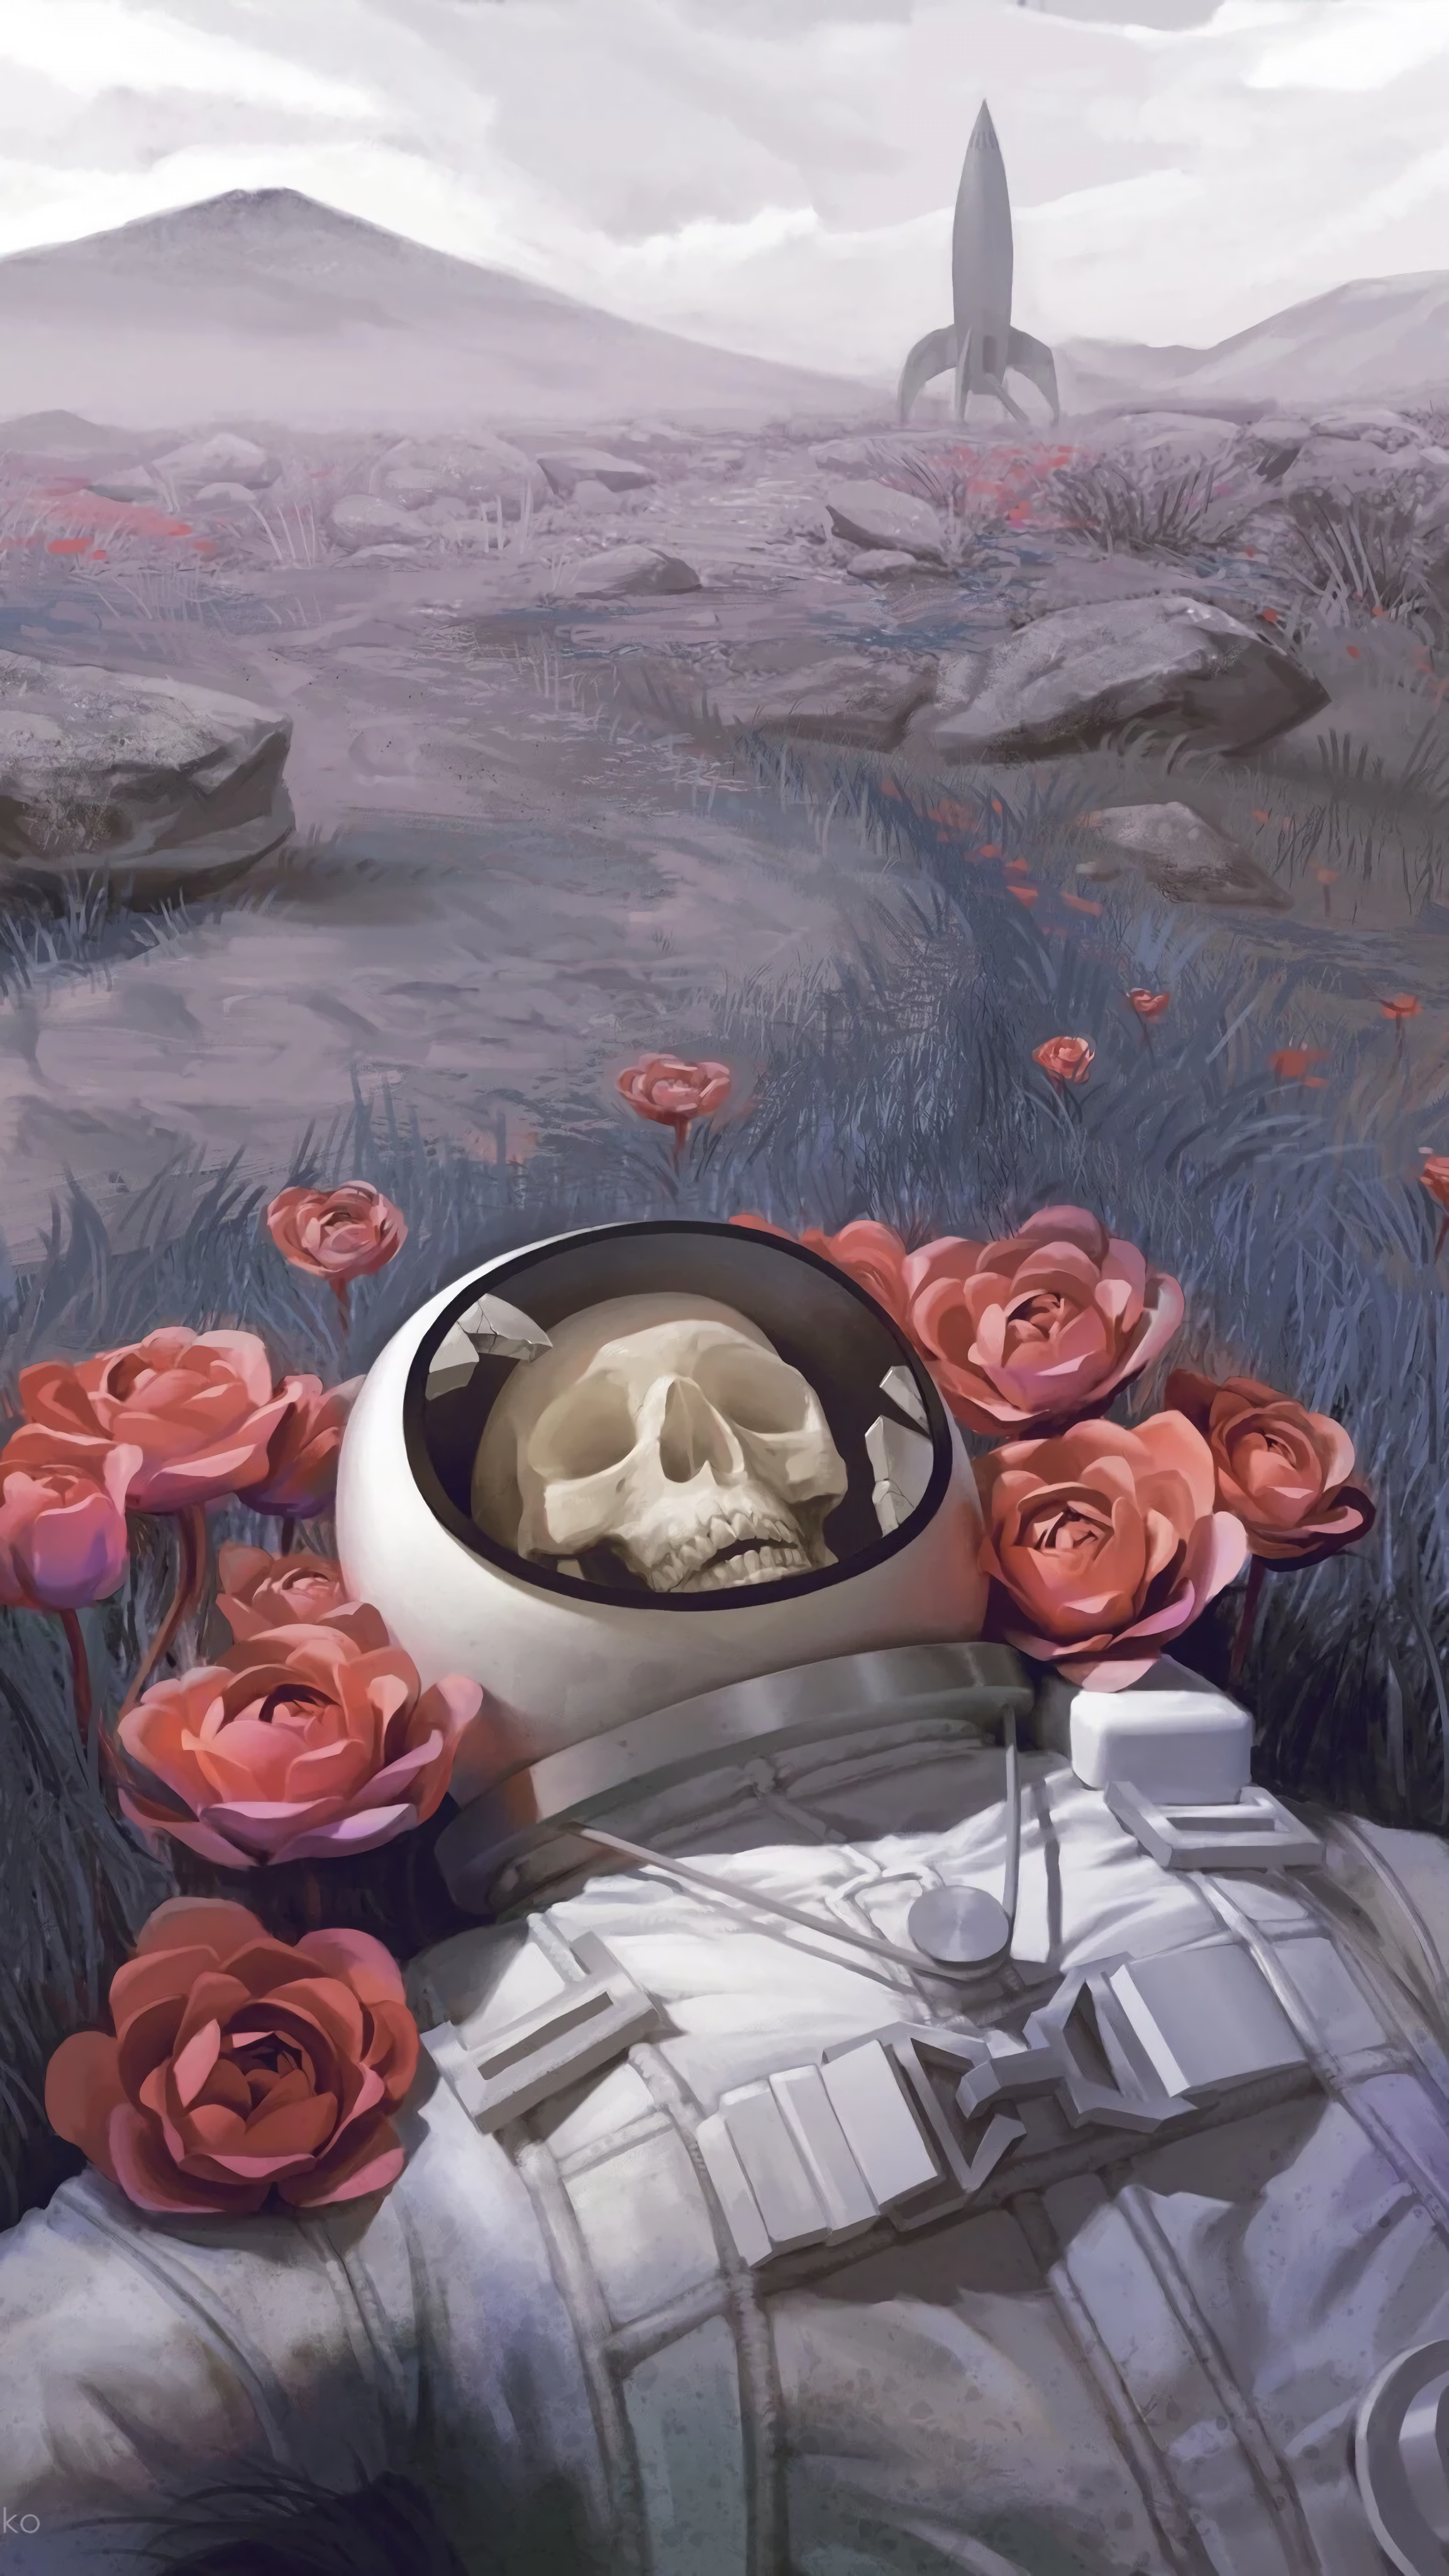 Artwork Digital Art Roses Flowers Astronaut Science Fiction Skull Spaceship 2304x4096